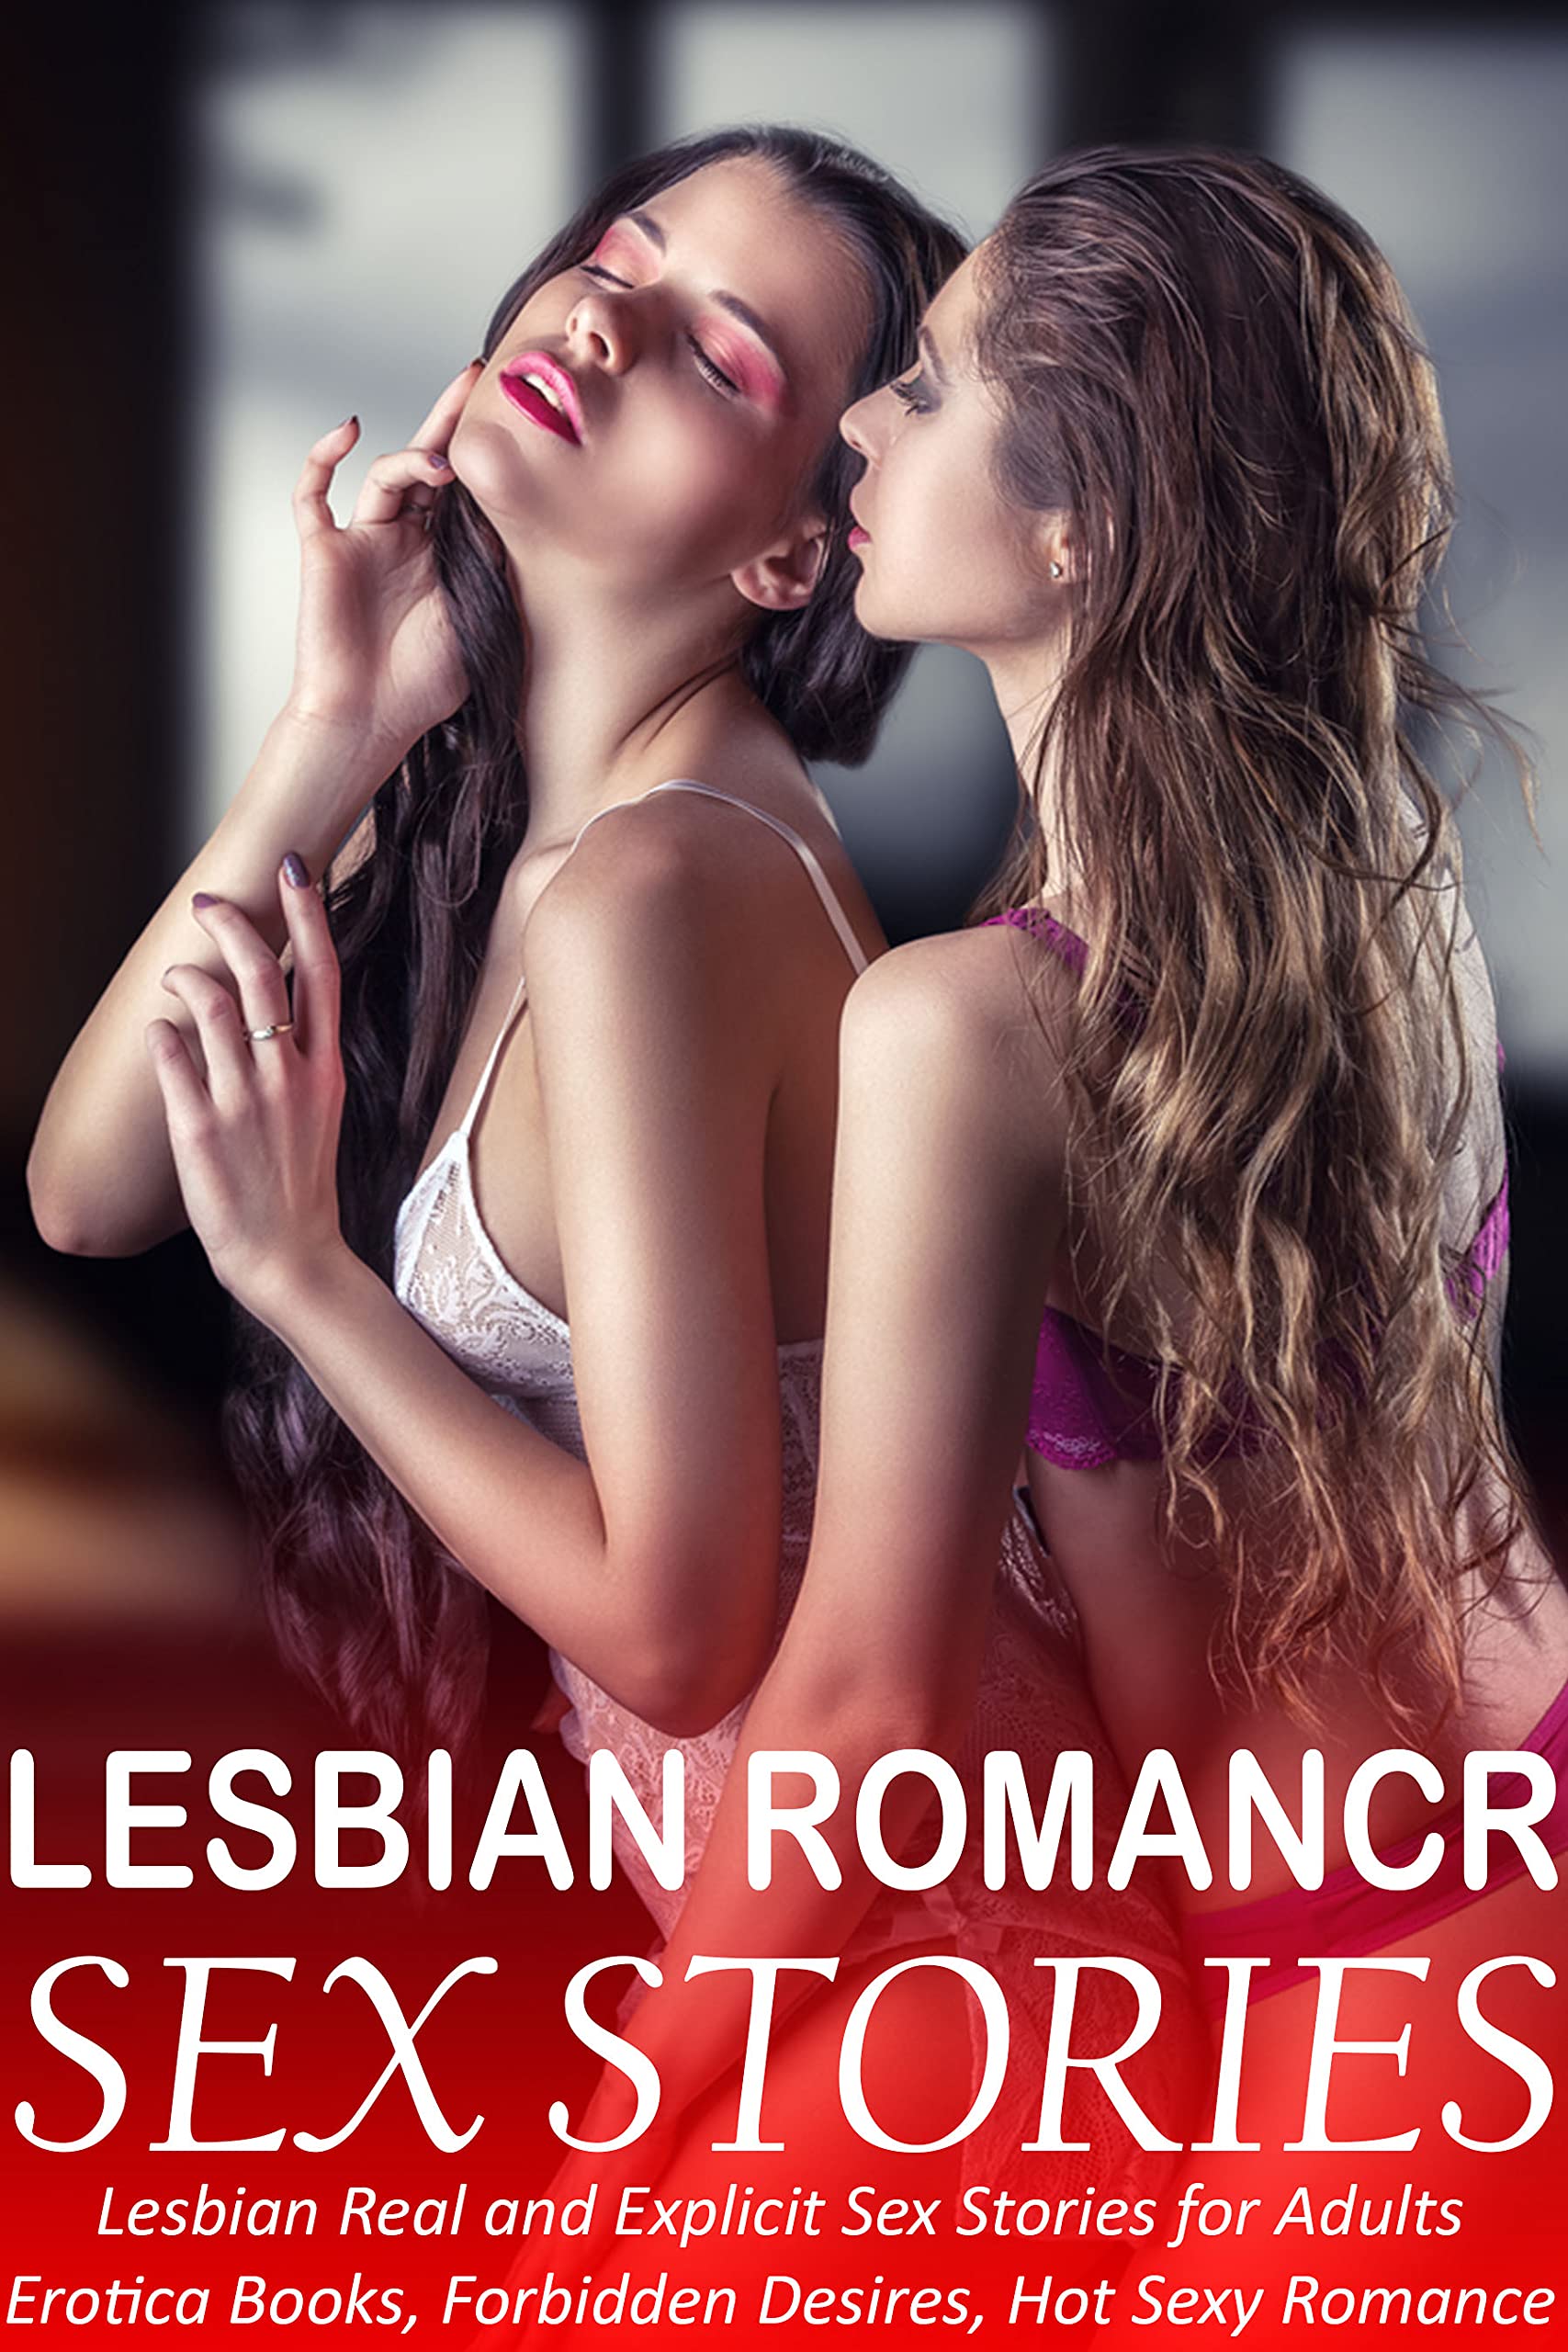 darlene valine recommends Romantic Lesbian Sex Stories